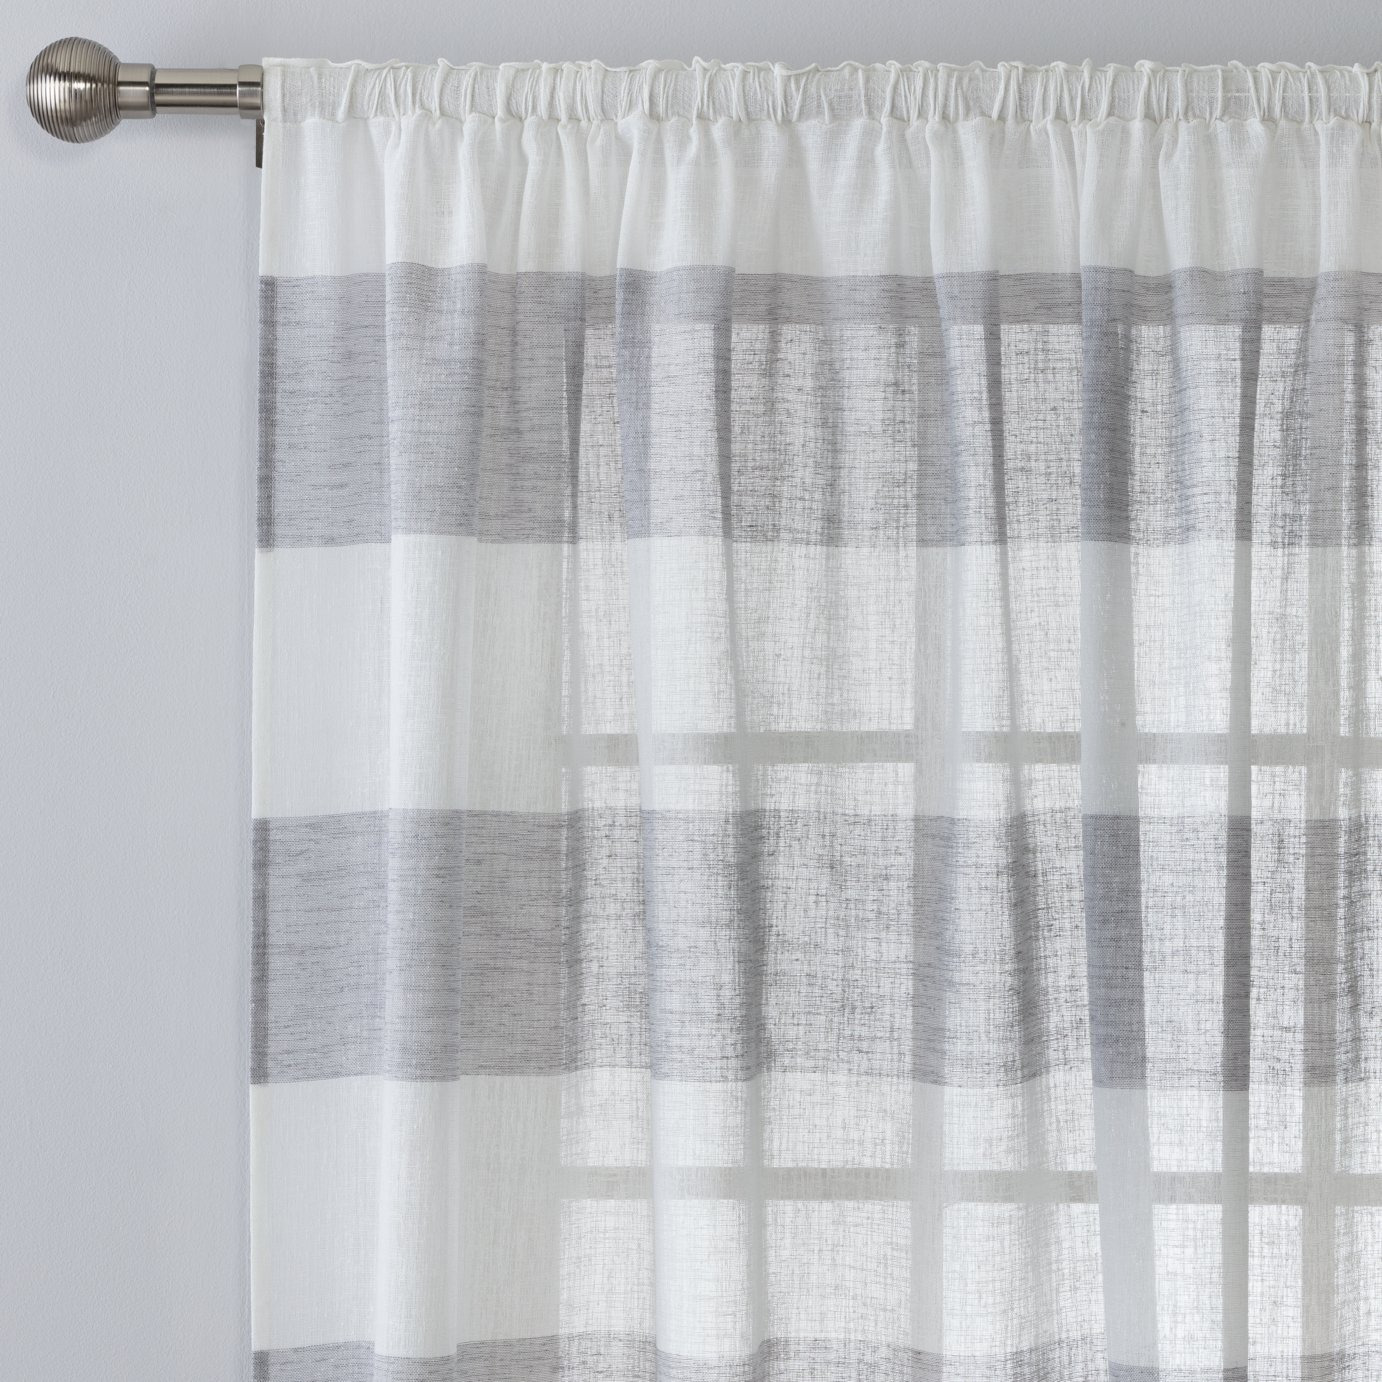 Habitat Striped Linen Pencil Pleat Curtain Panel - Grey - image 1